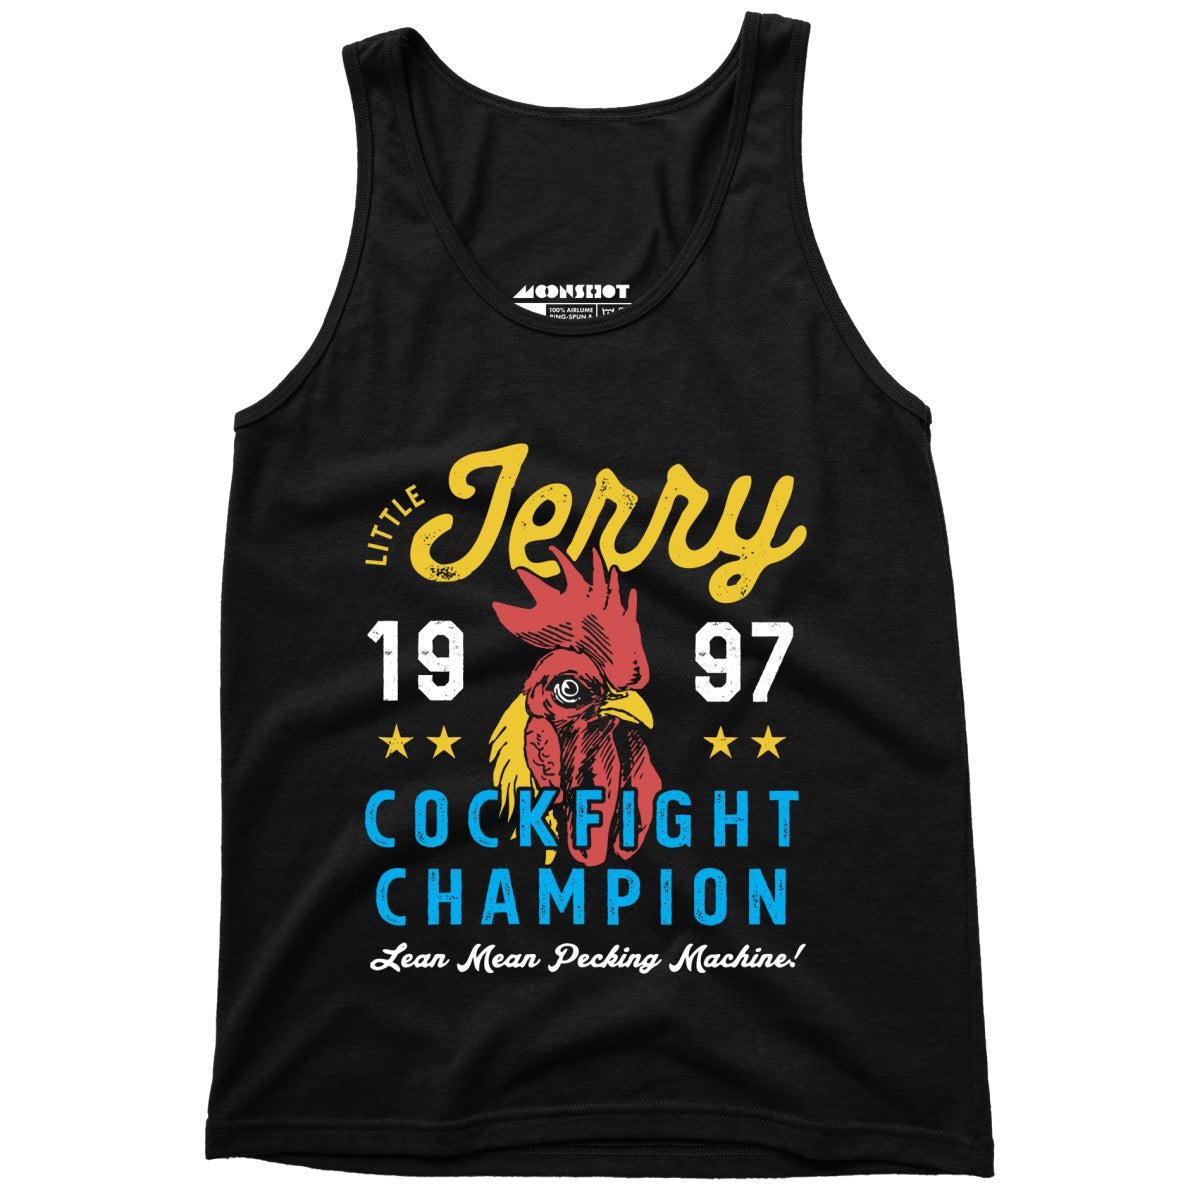 Little Jerry Cockfight Champion - Unisex Tank Top